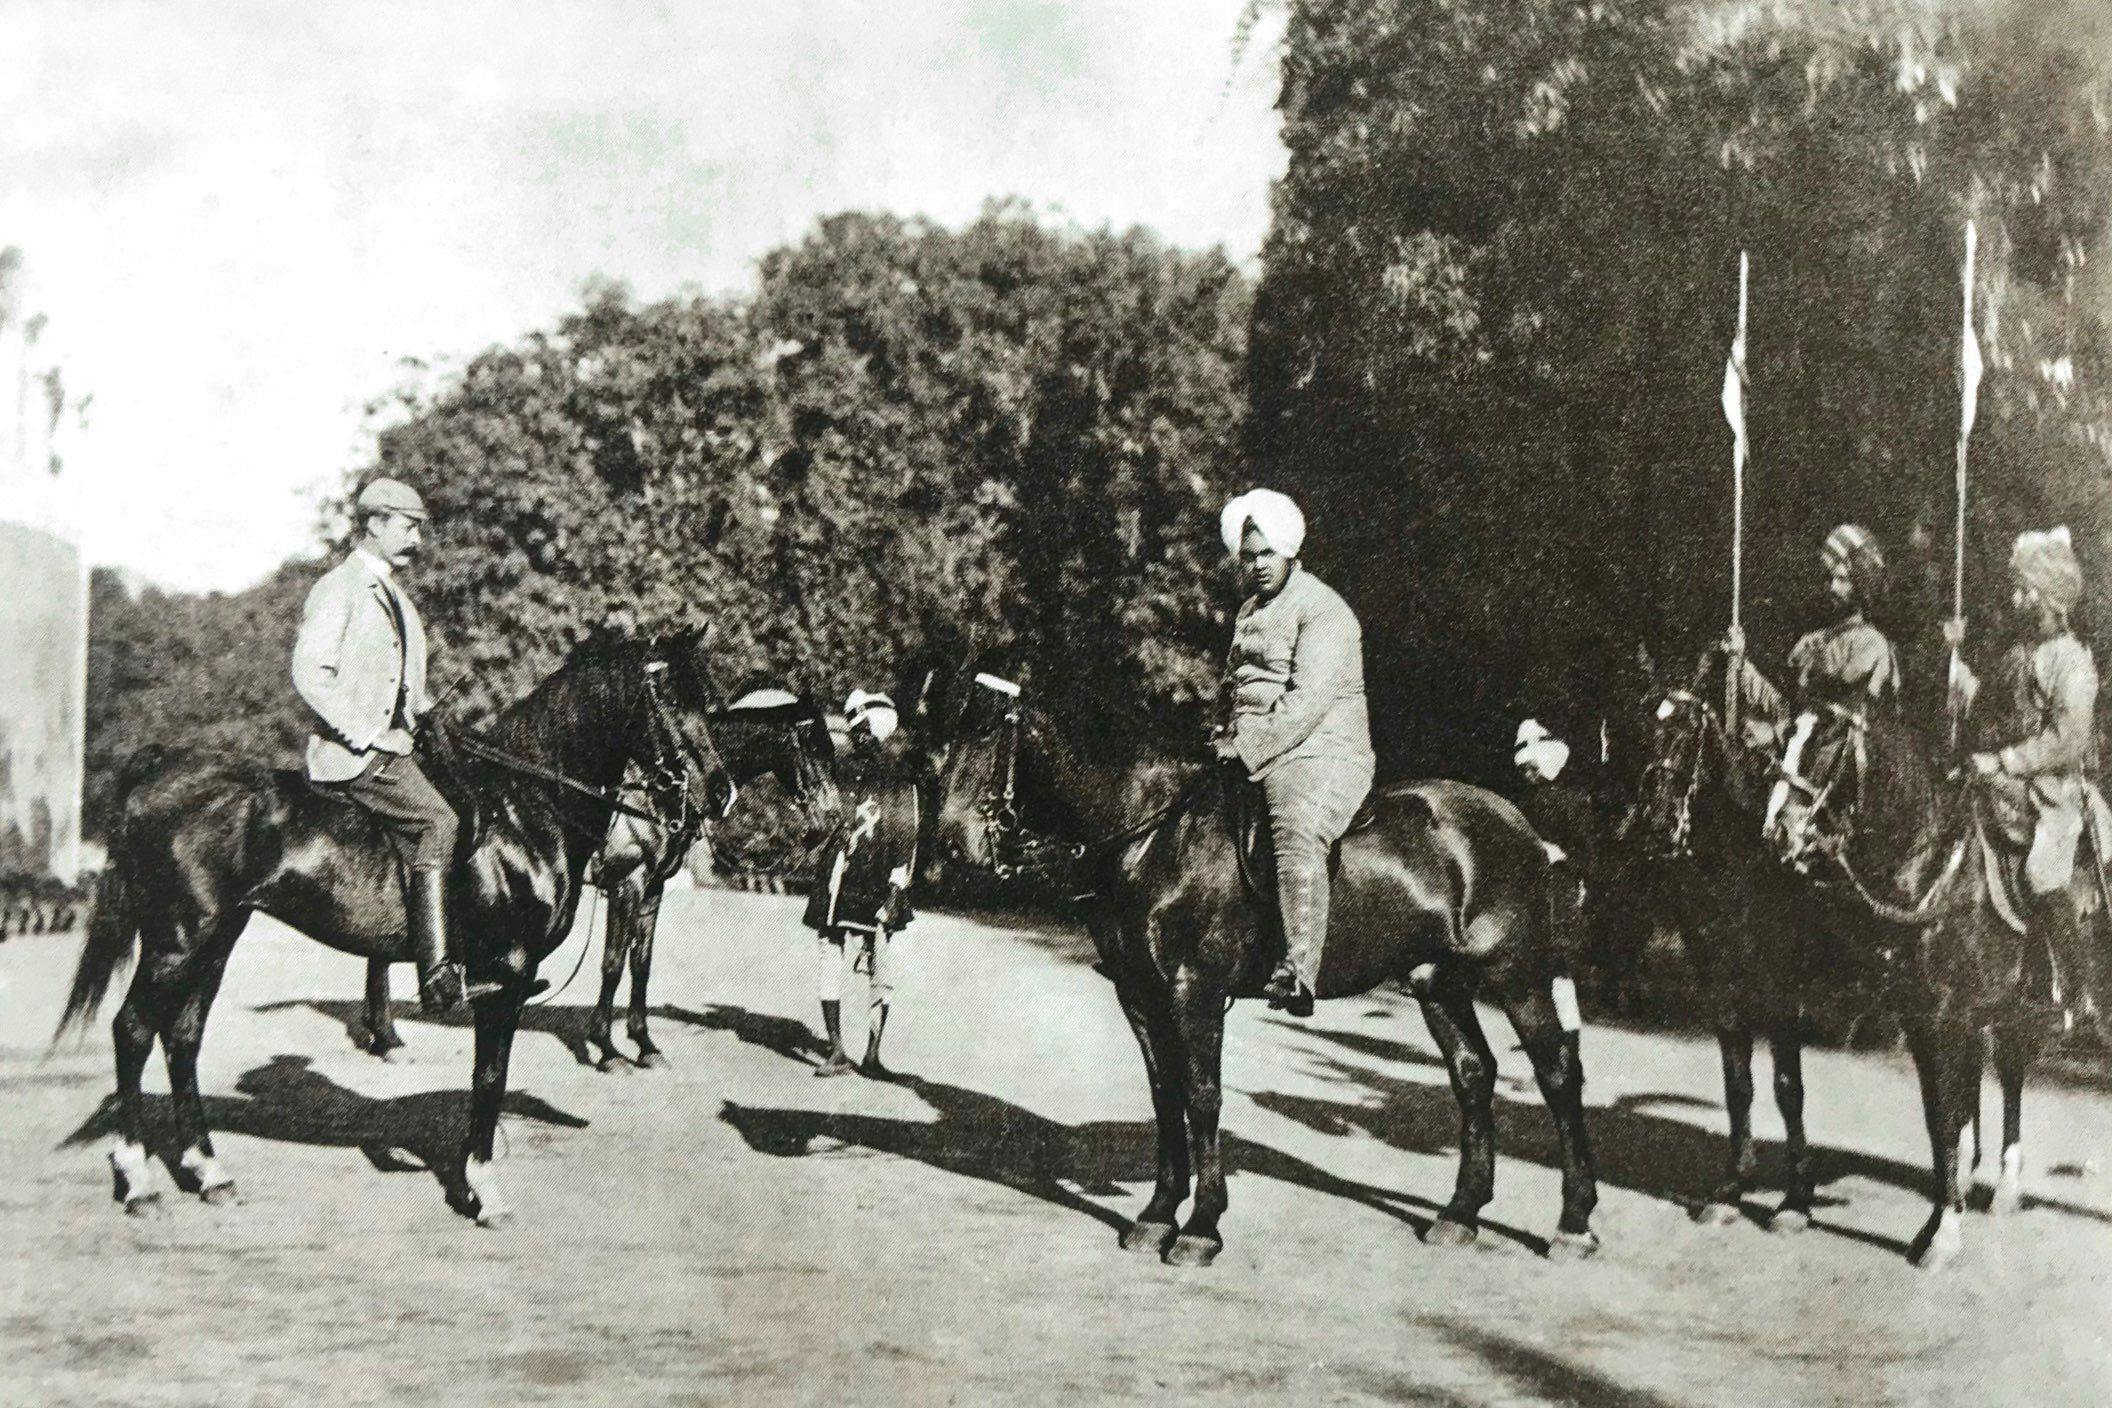 Maharaja on horseback, c. 1899